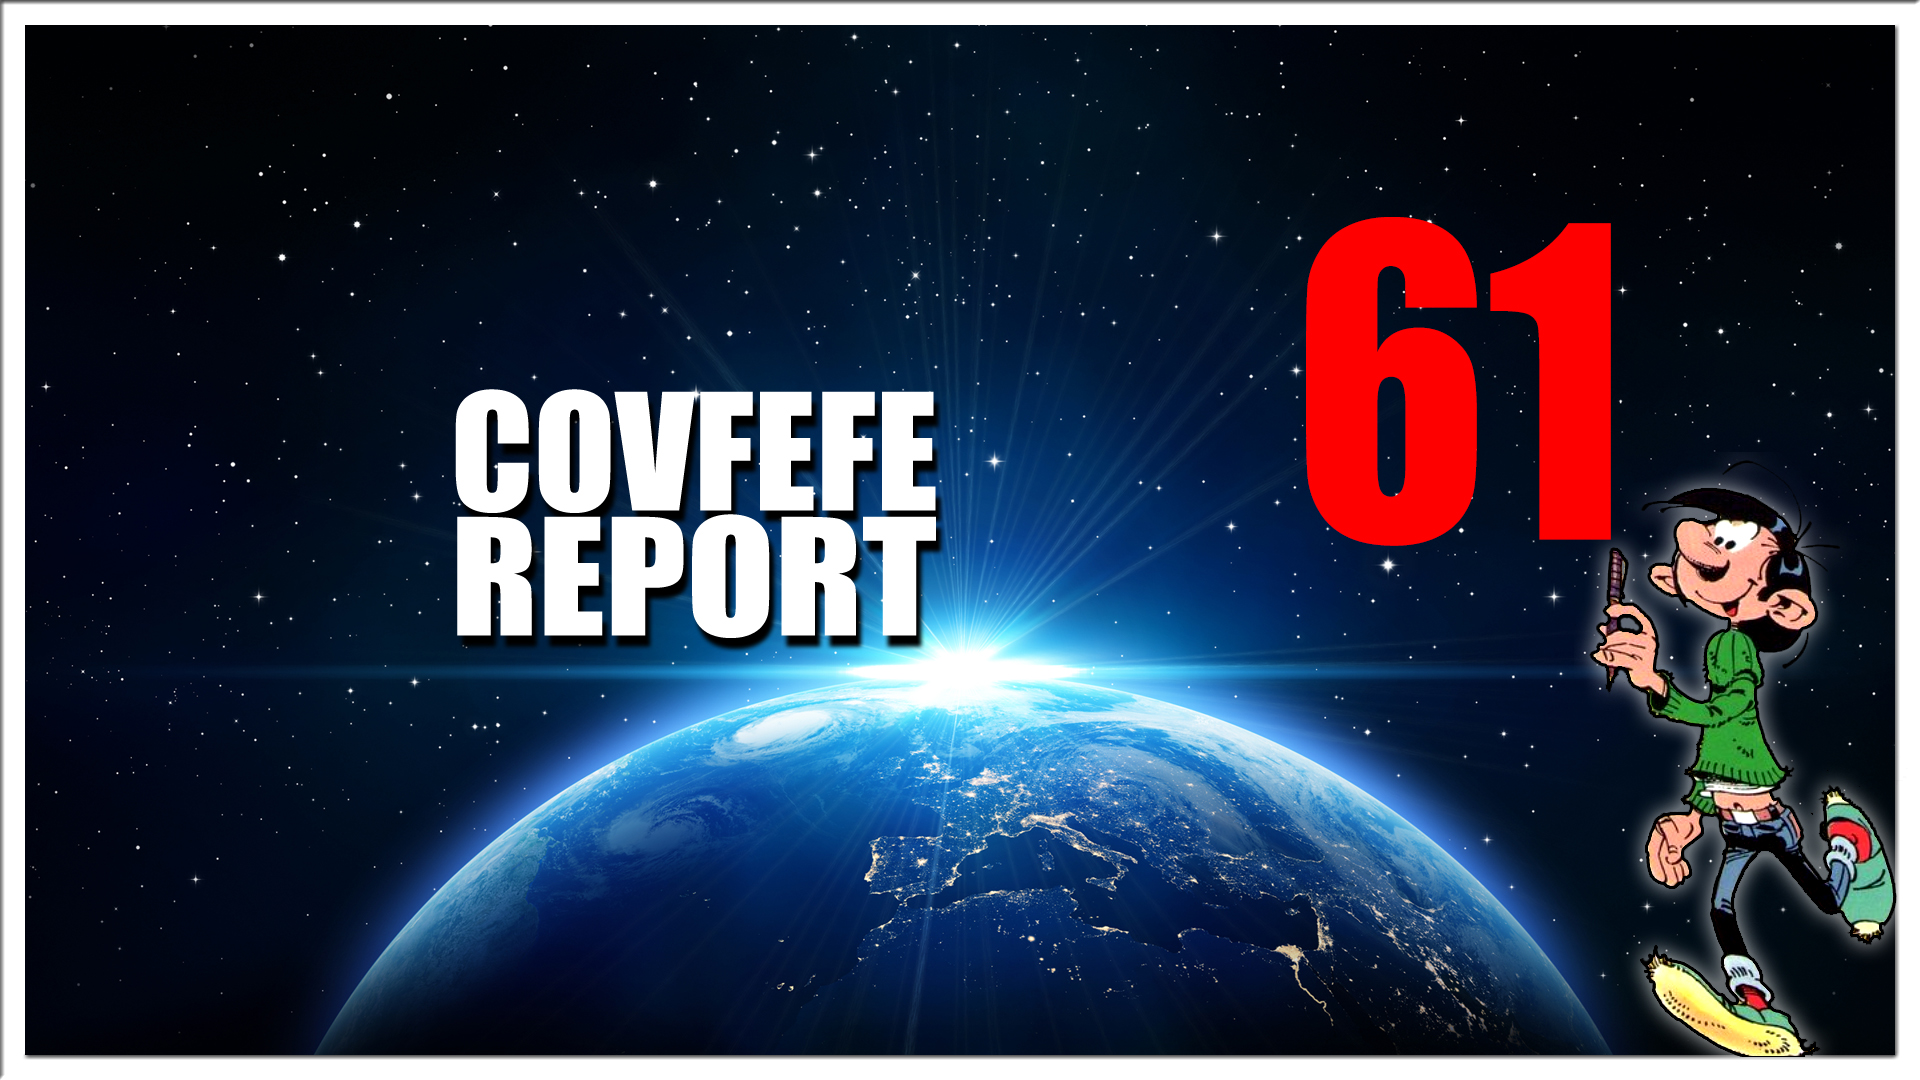 Covfefe Report 61. Baby loterij, Novartis, Megafarms, Africa, MH17